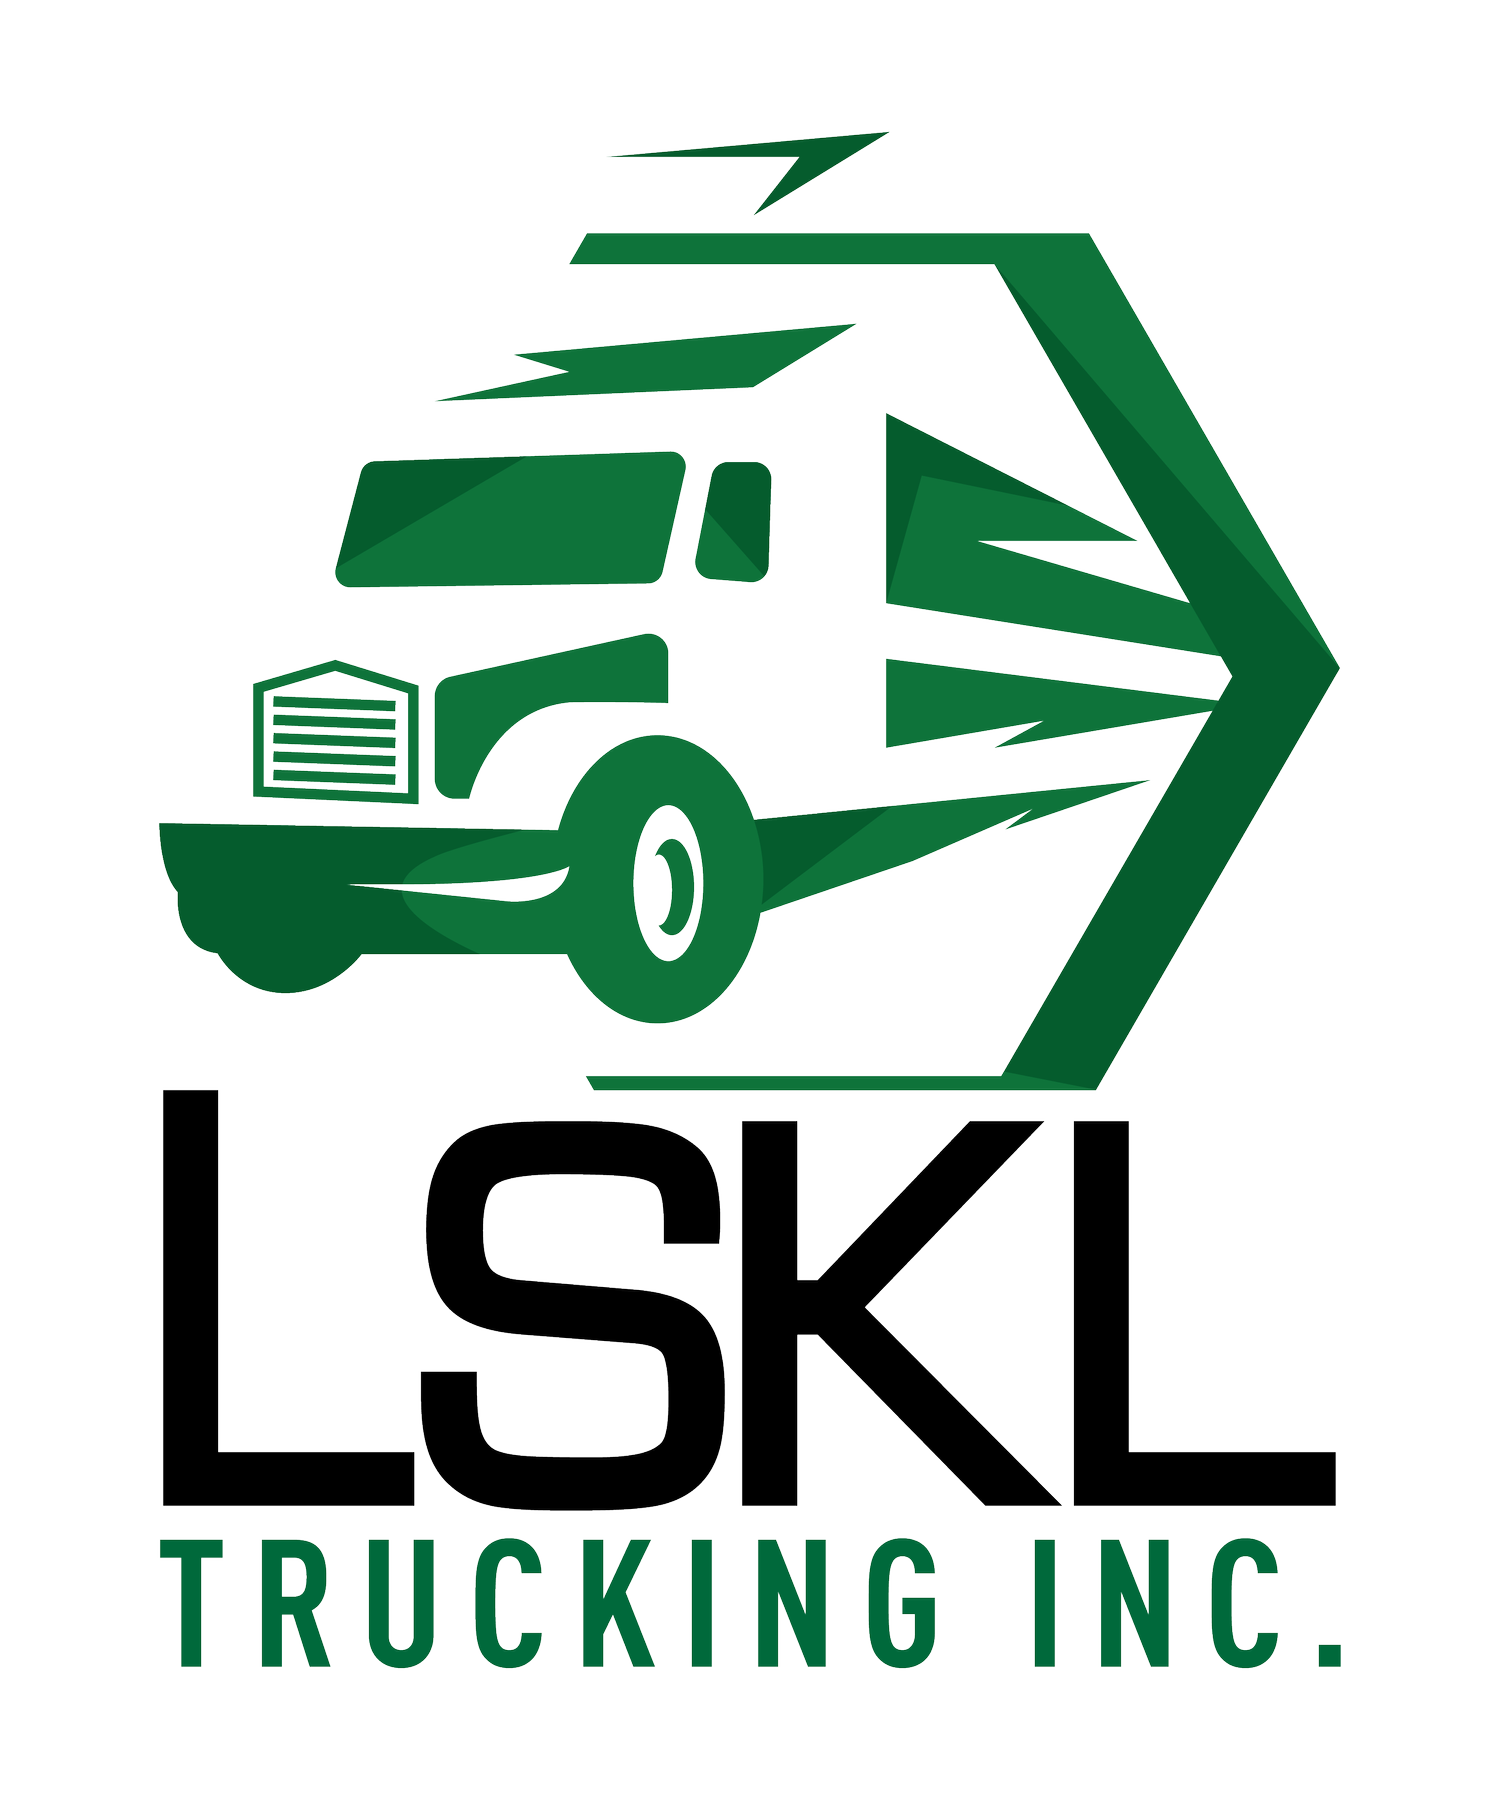 LSKL Trucking Inc